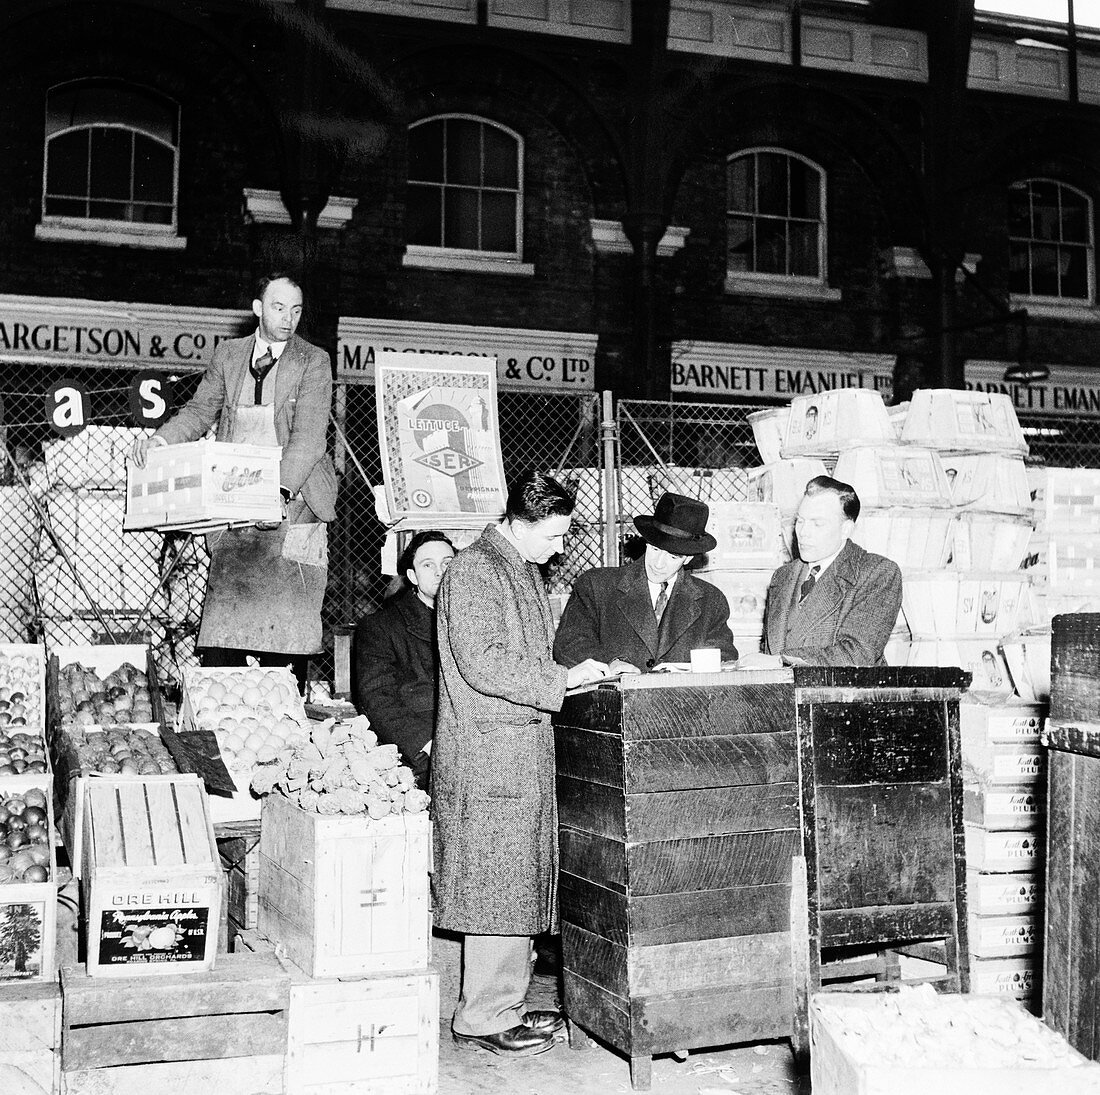 Covent Garden Market, London, c1952